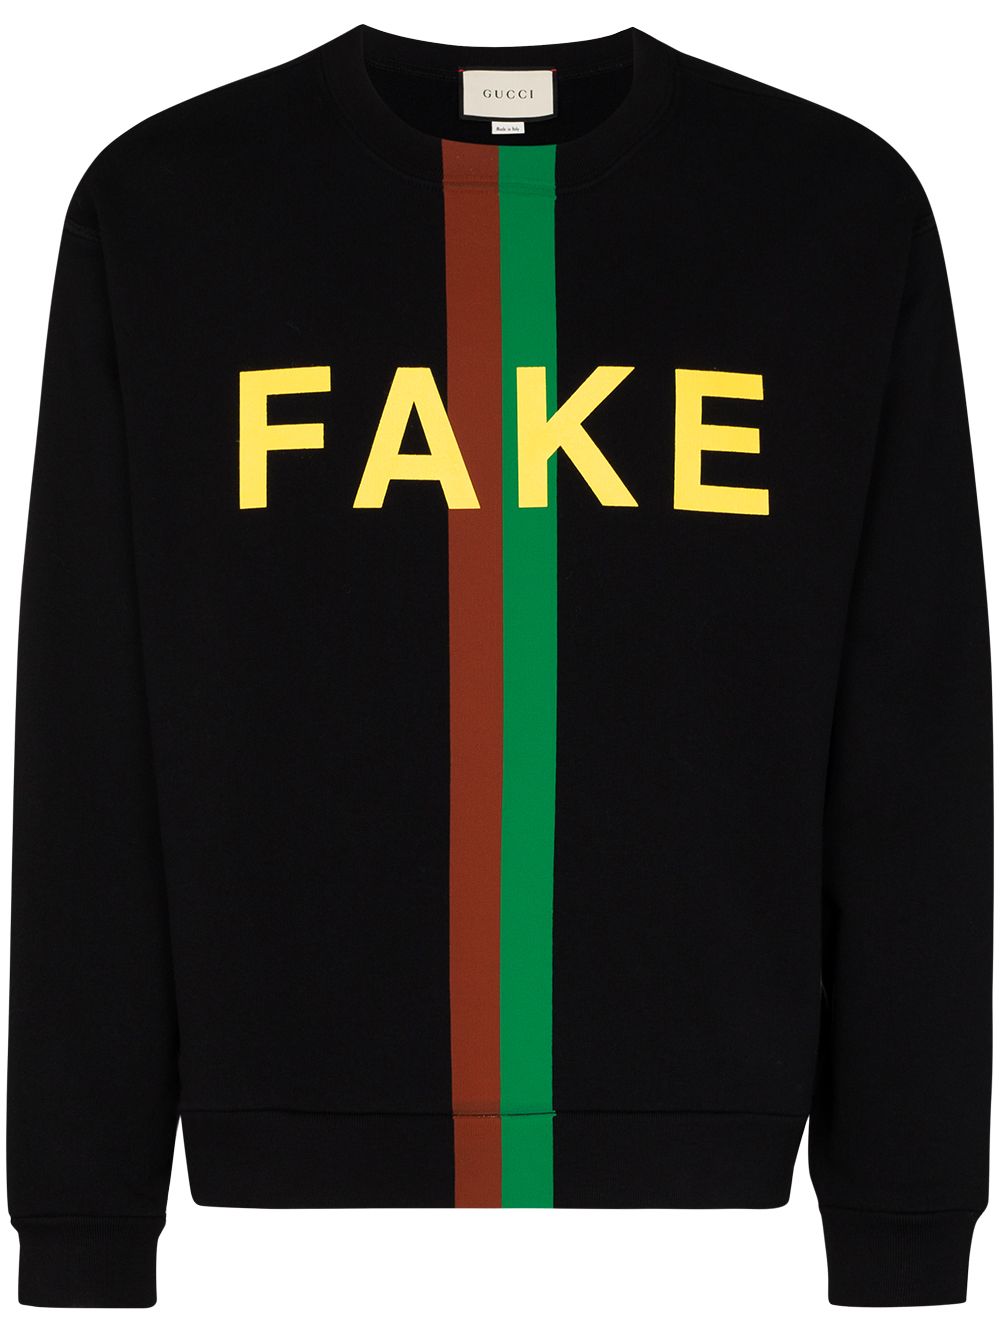 фото Gucci свитер с принтом fake/not